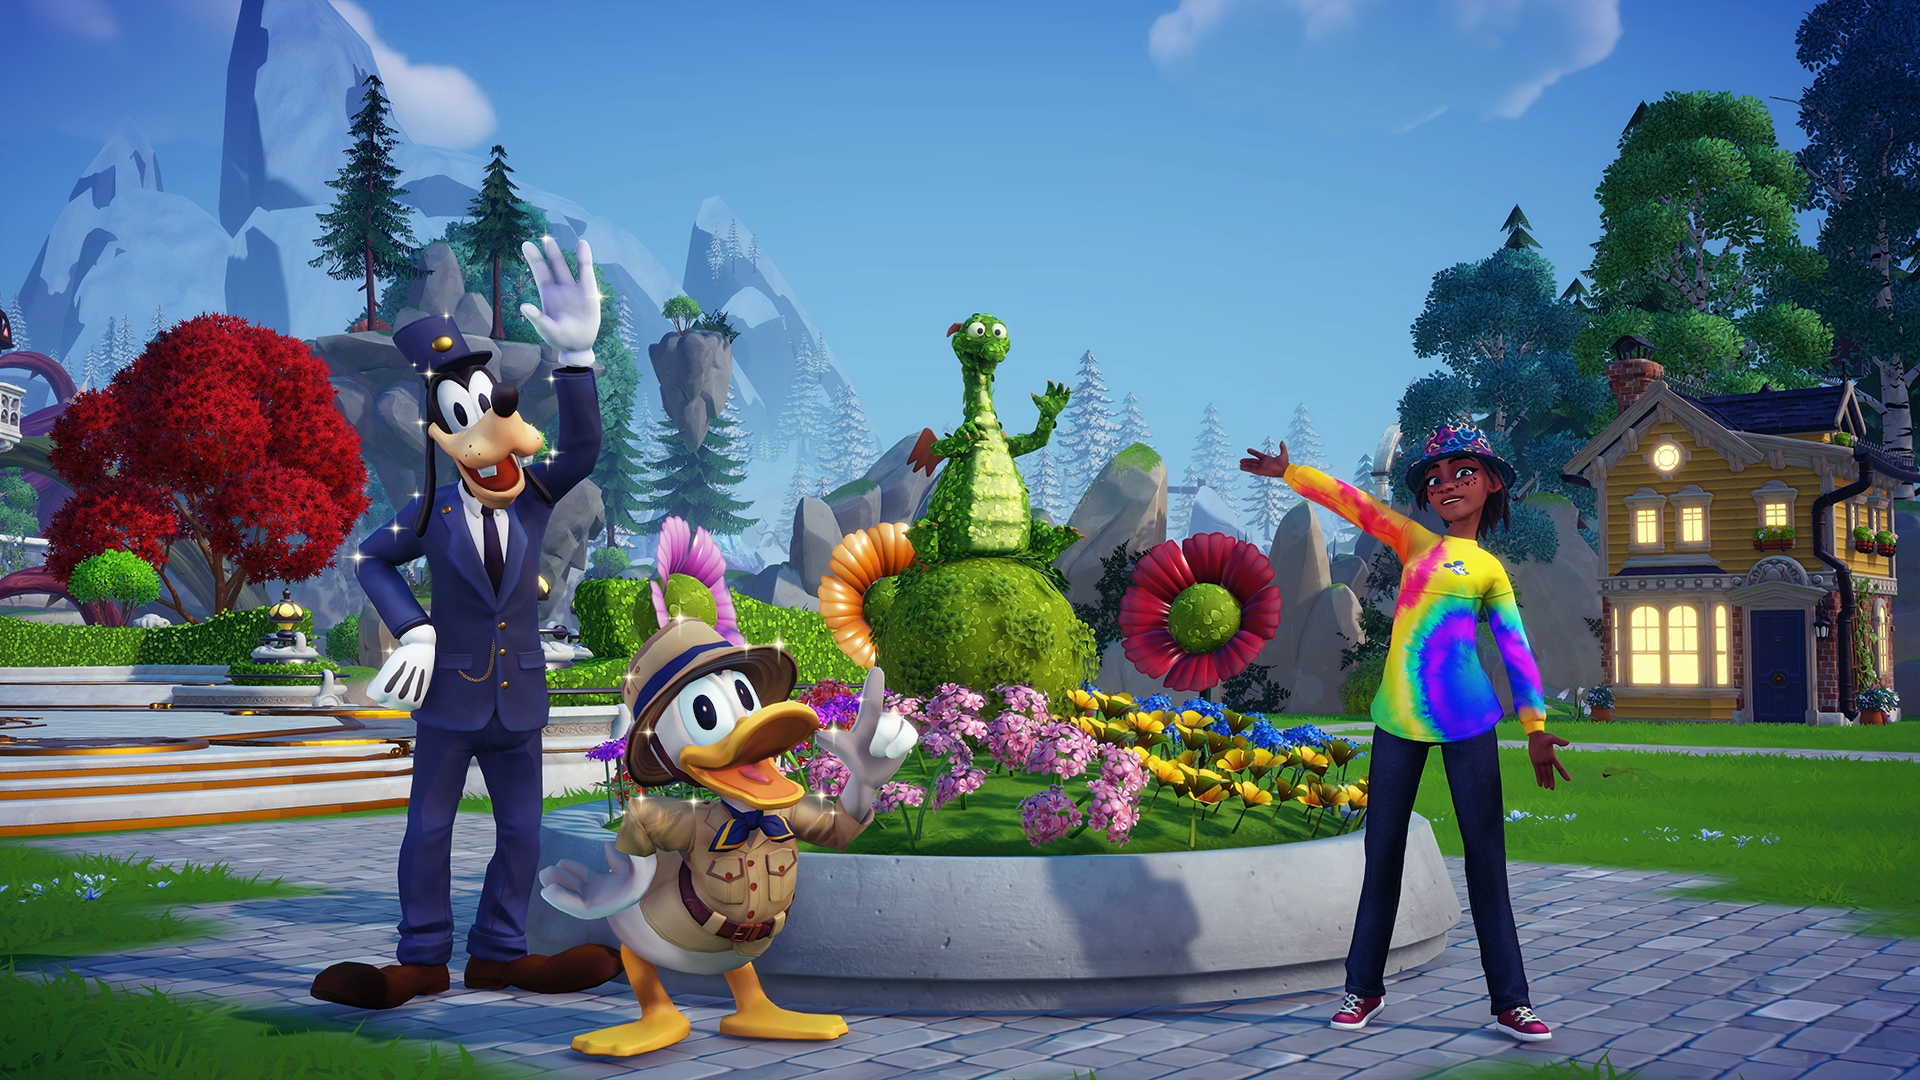 Disney Dreaming Valley chega para PS5 e PS4 em 2022 – PlayStation